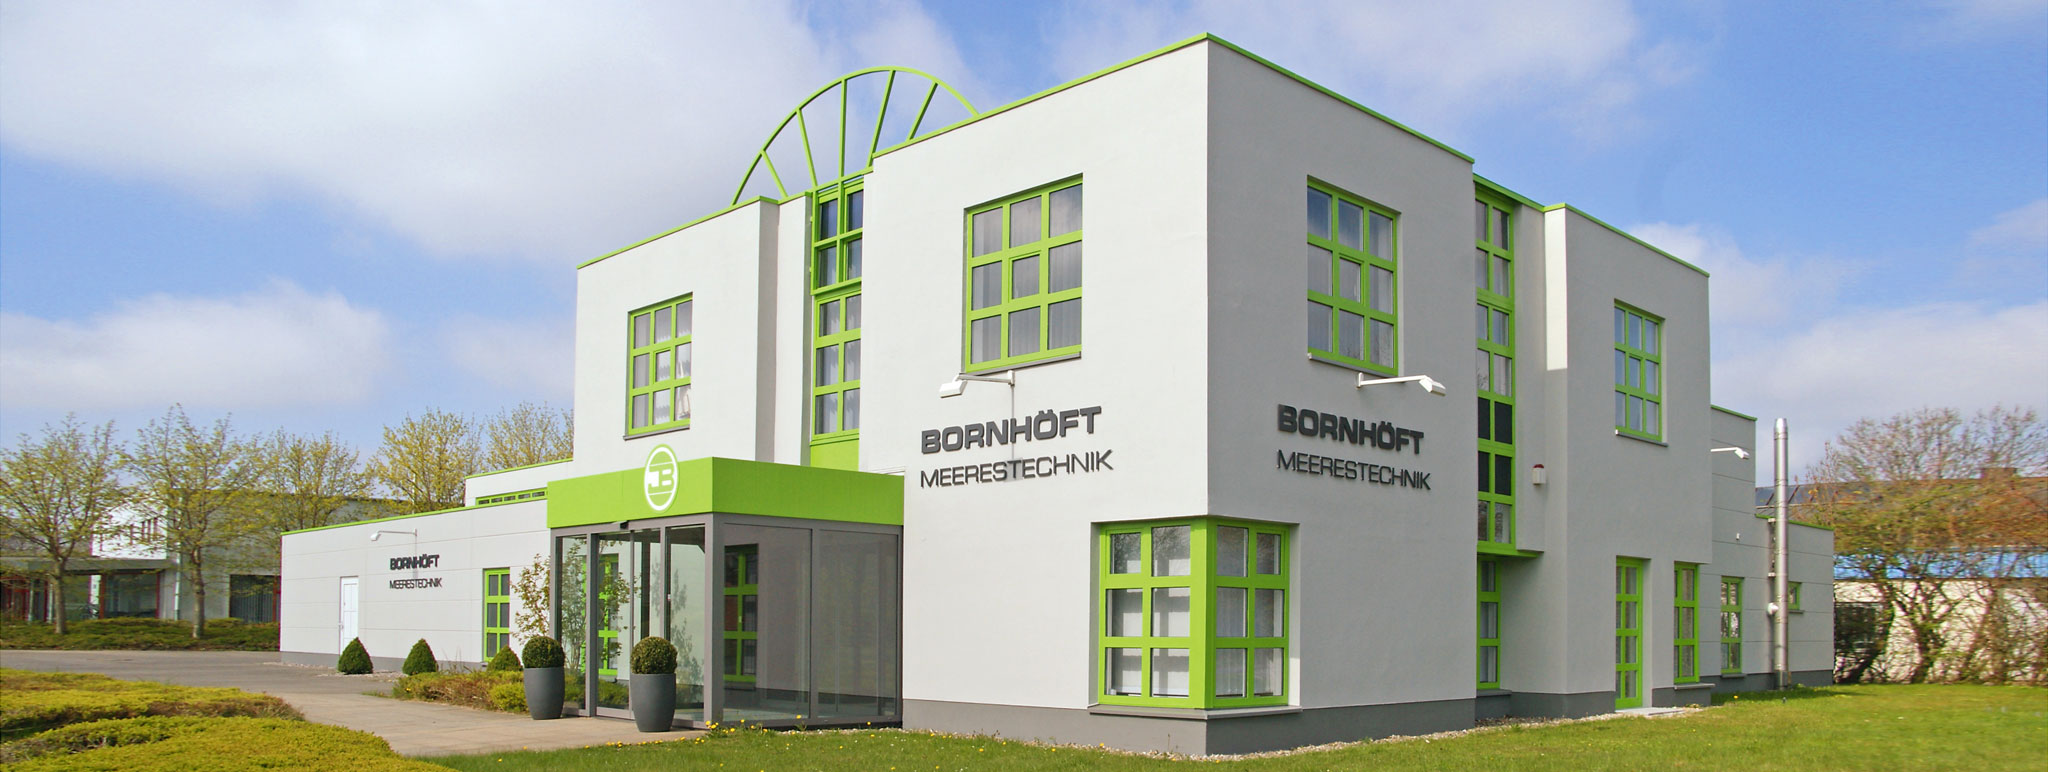 Bornhöft Heerestechnik - Firmengebäude in Kiel